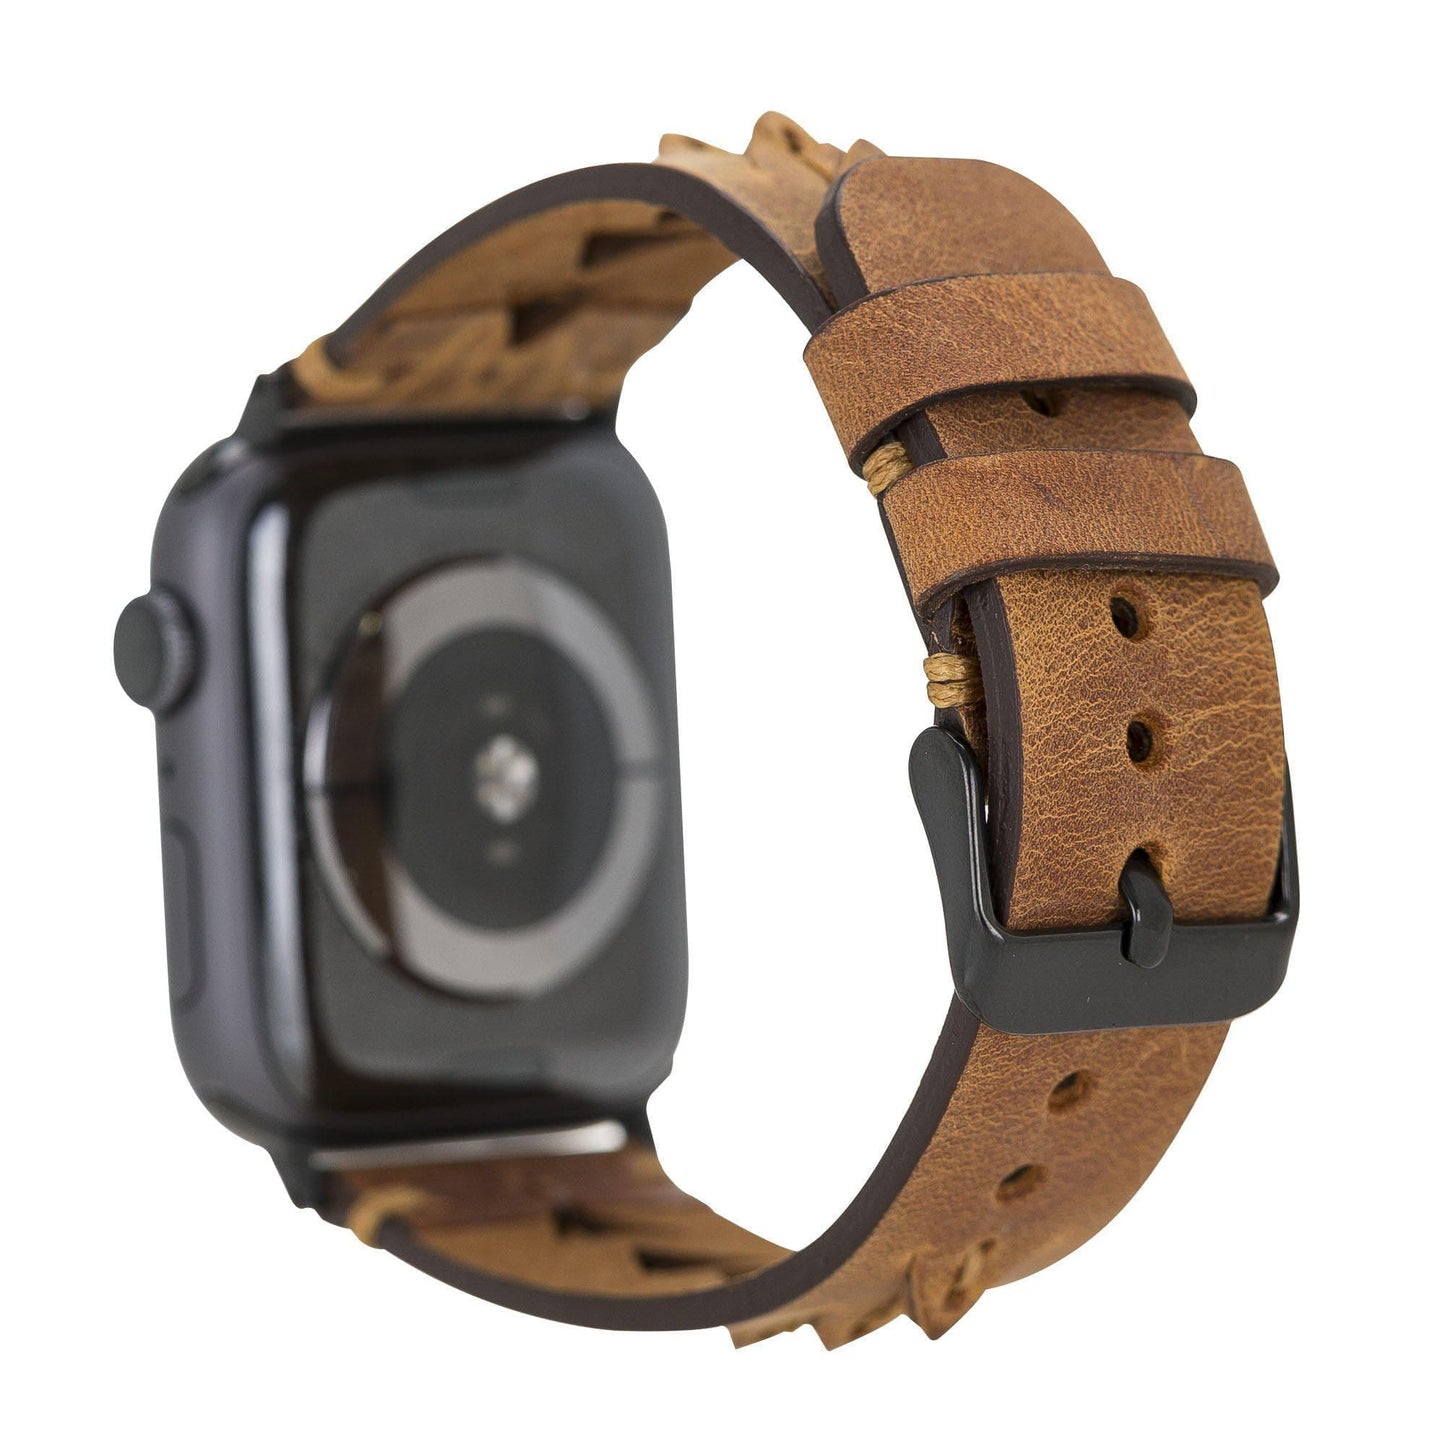 Longleat Apple Watch Leather Straps